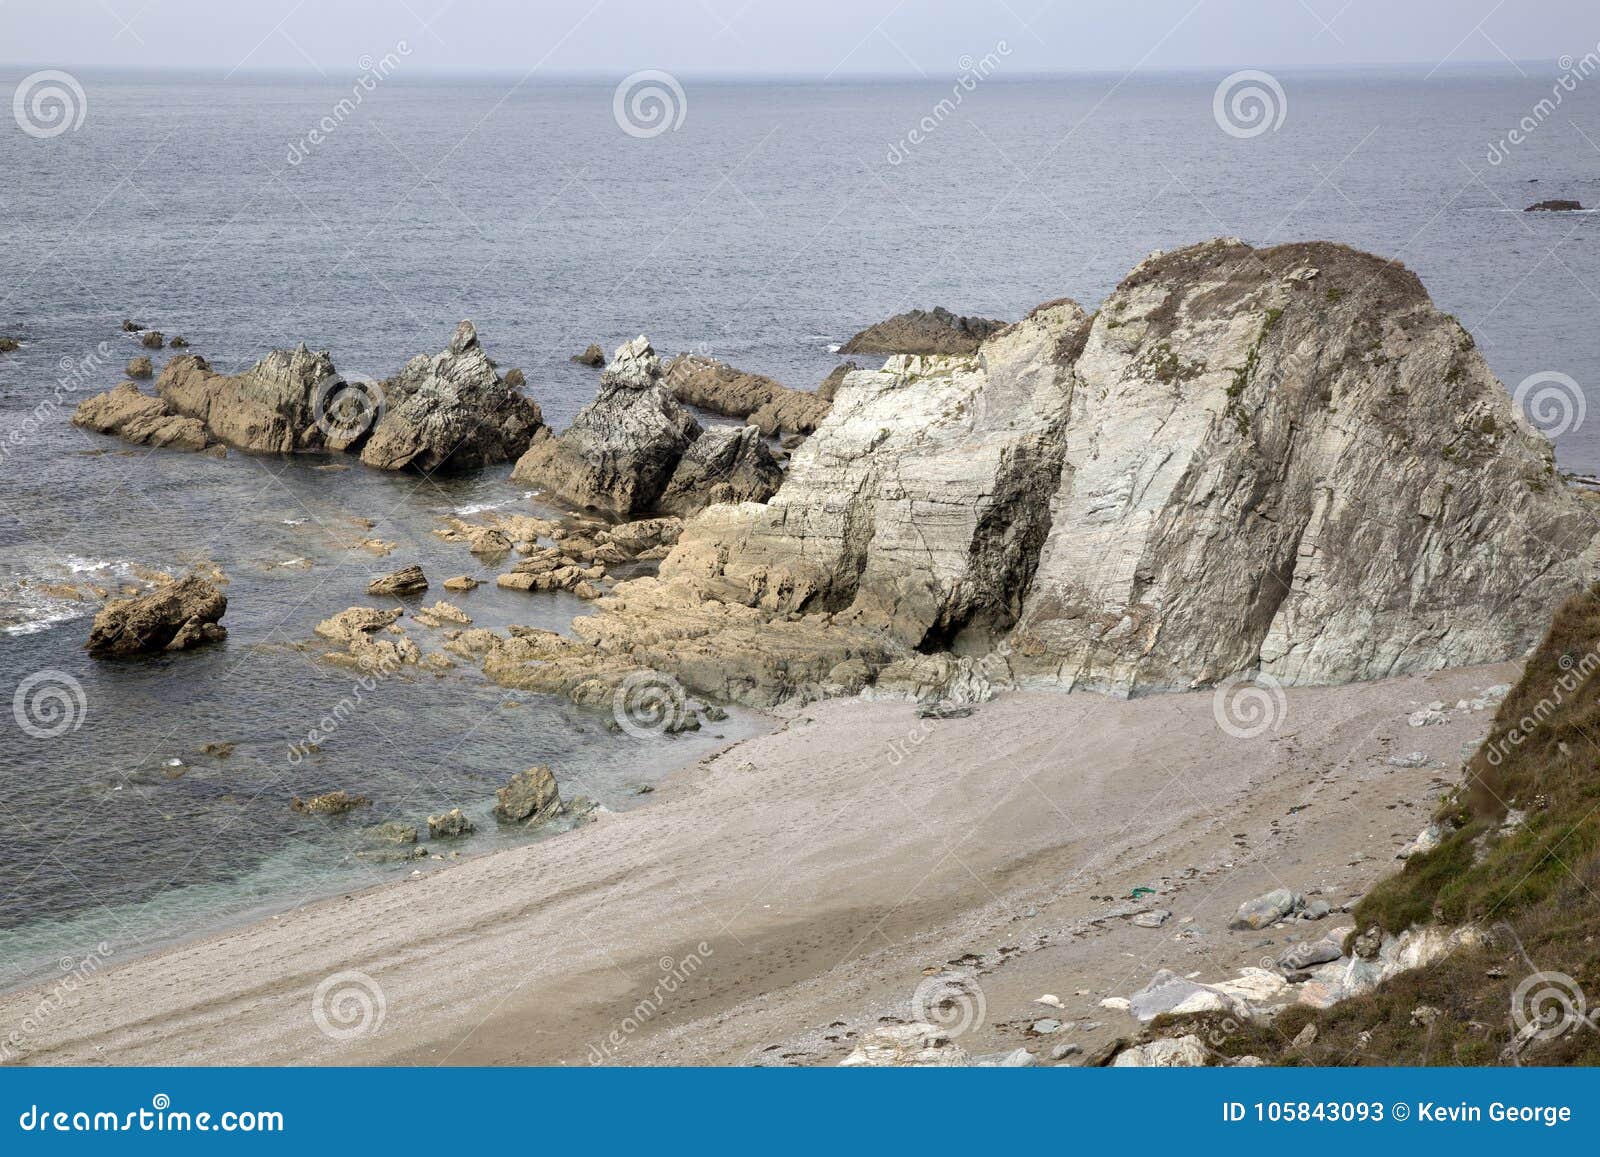 rocks on carro beach; galicia